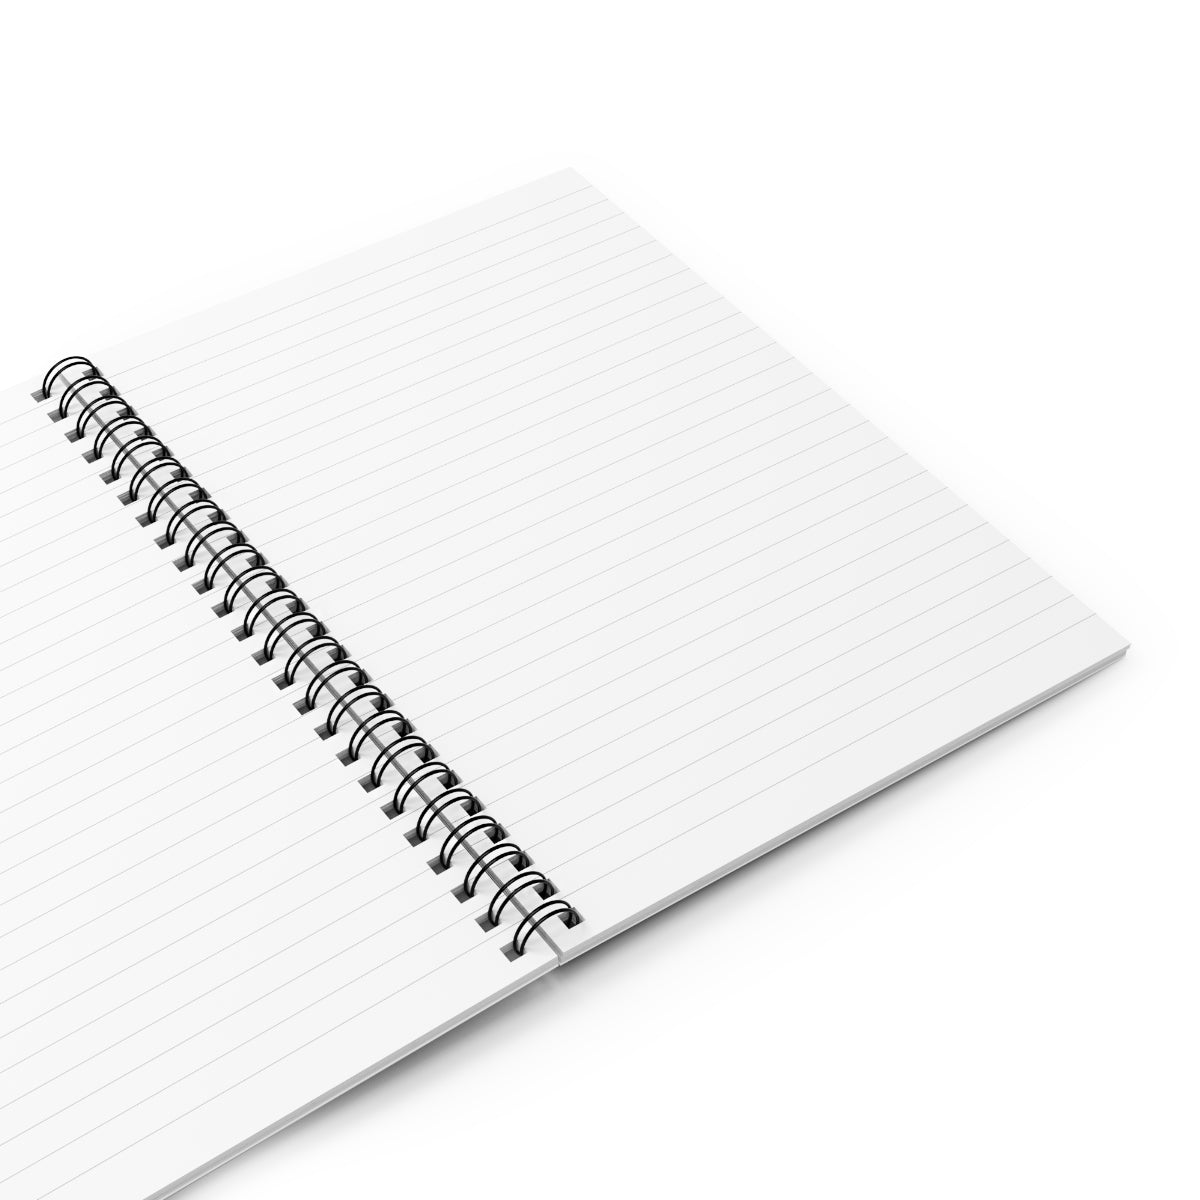 Behavior Analysis Spiral Notebook - Ruled Line